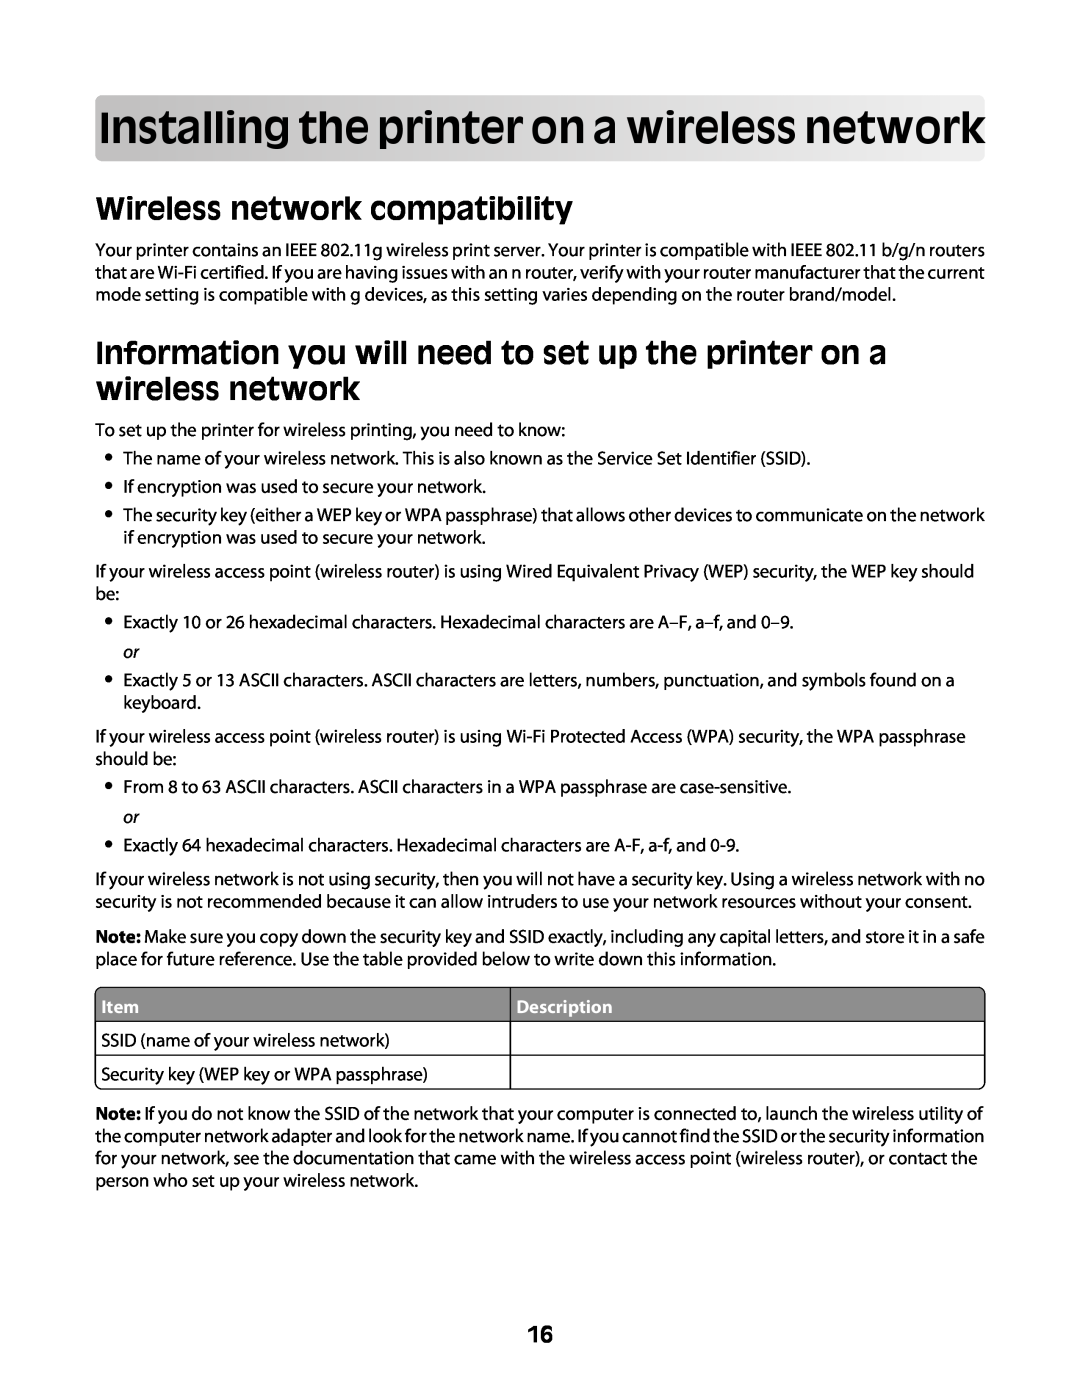 Lexmark Z2400 Series manual Installingtheprinteron awirelessnetwork, Wireless network compatibility, Description 